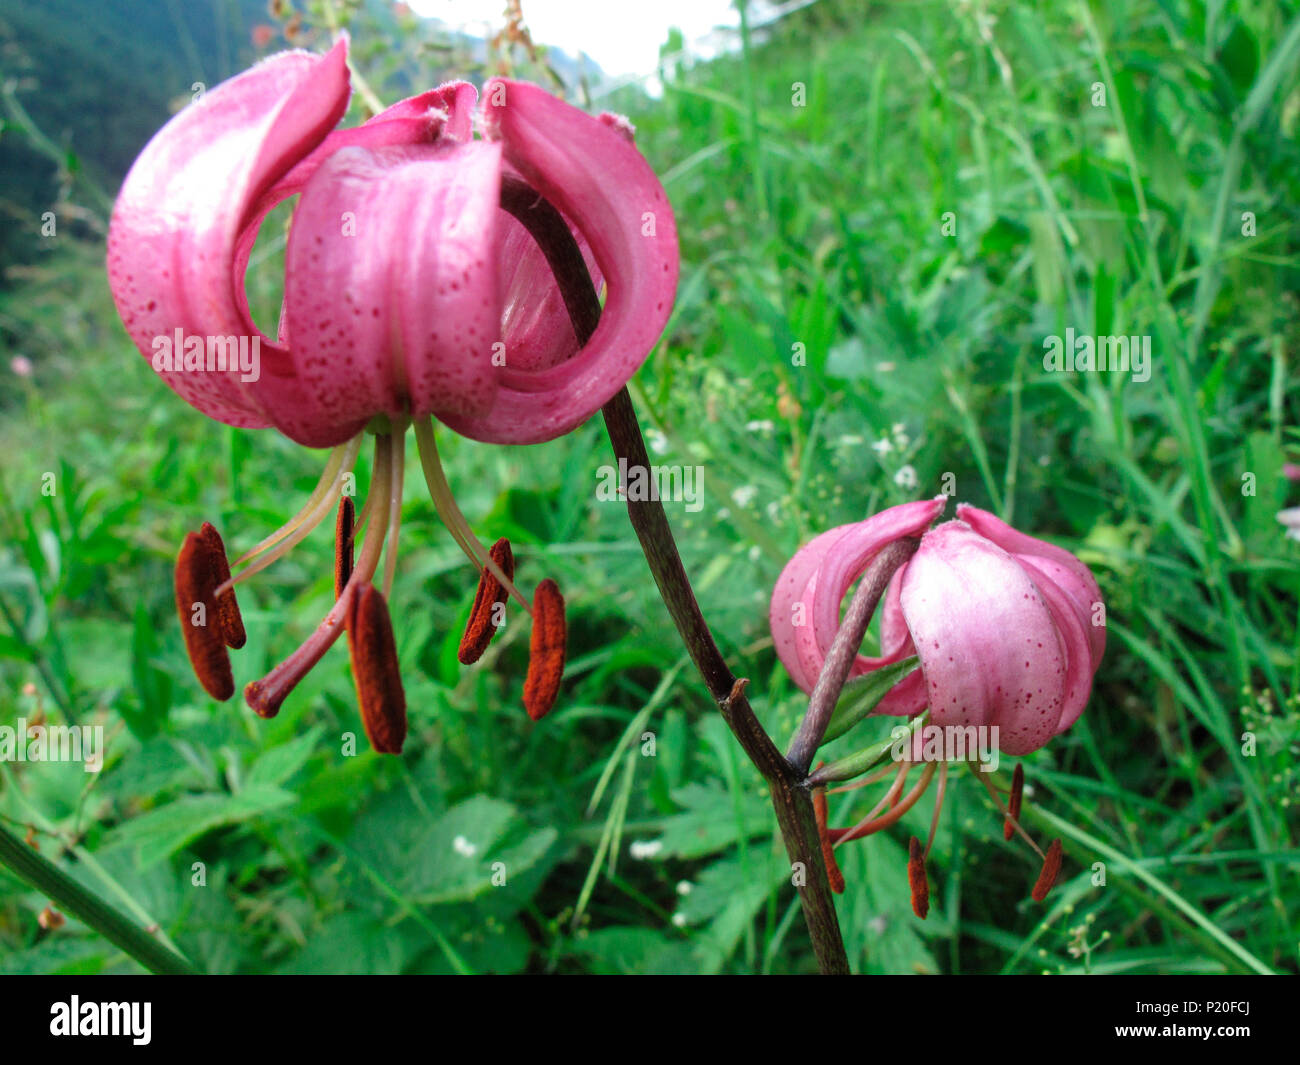 Alps, Martagon lis flower Stock Photo